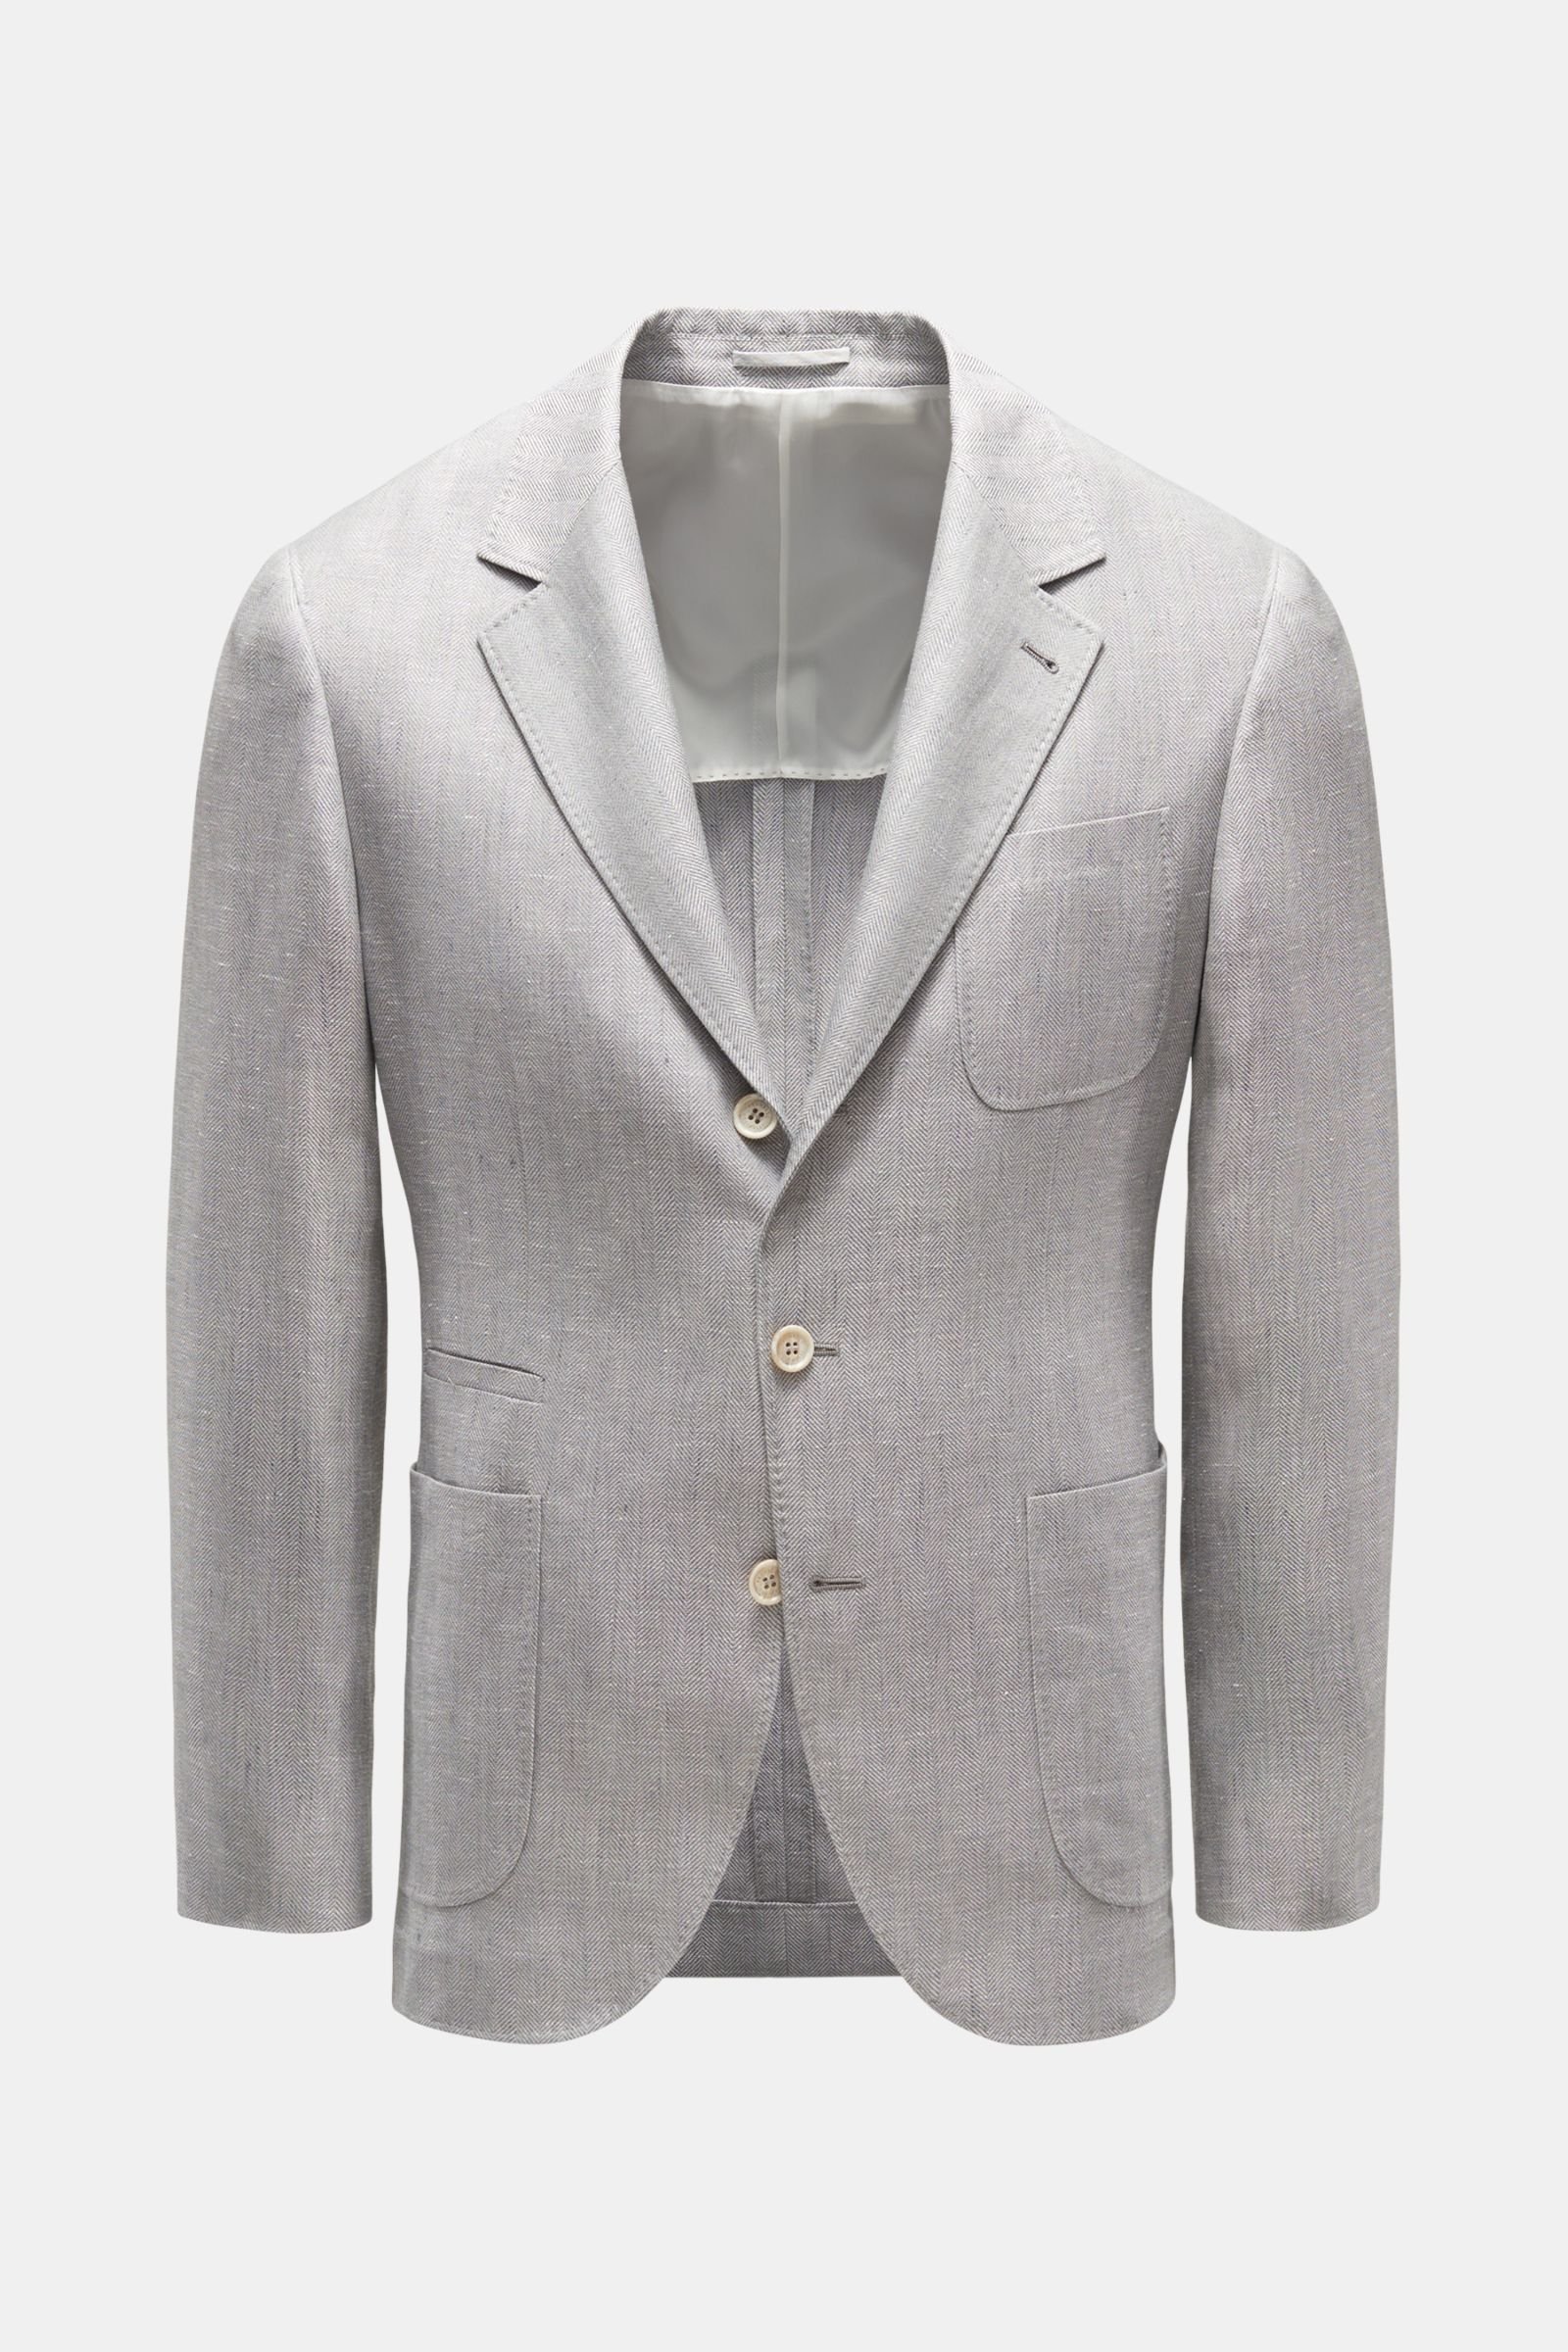 Smart-casual jacket grey